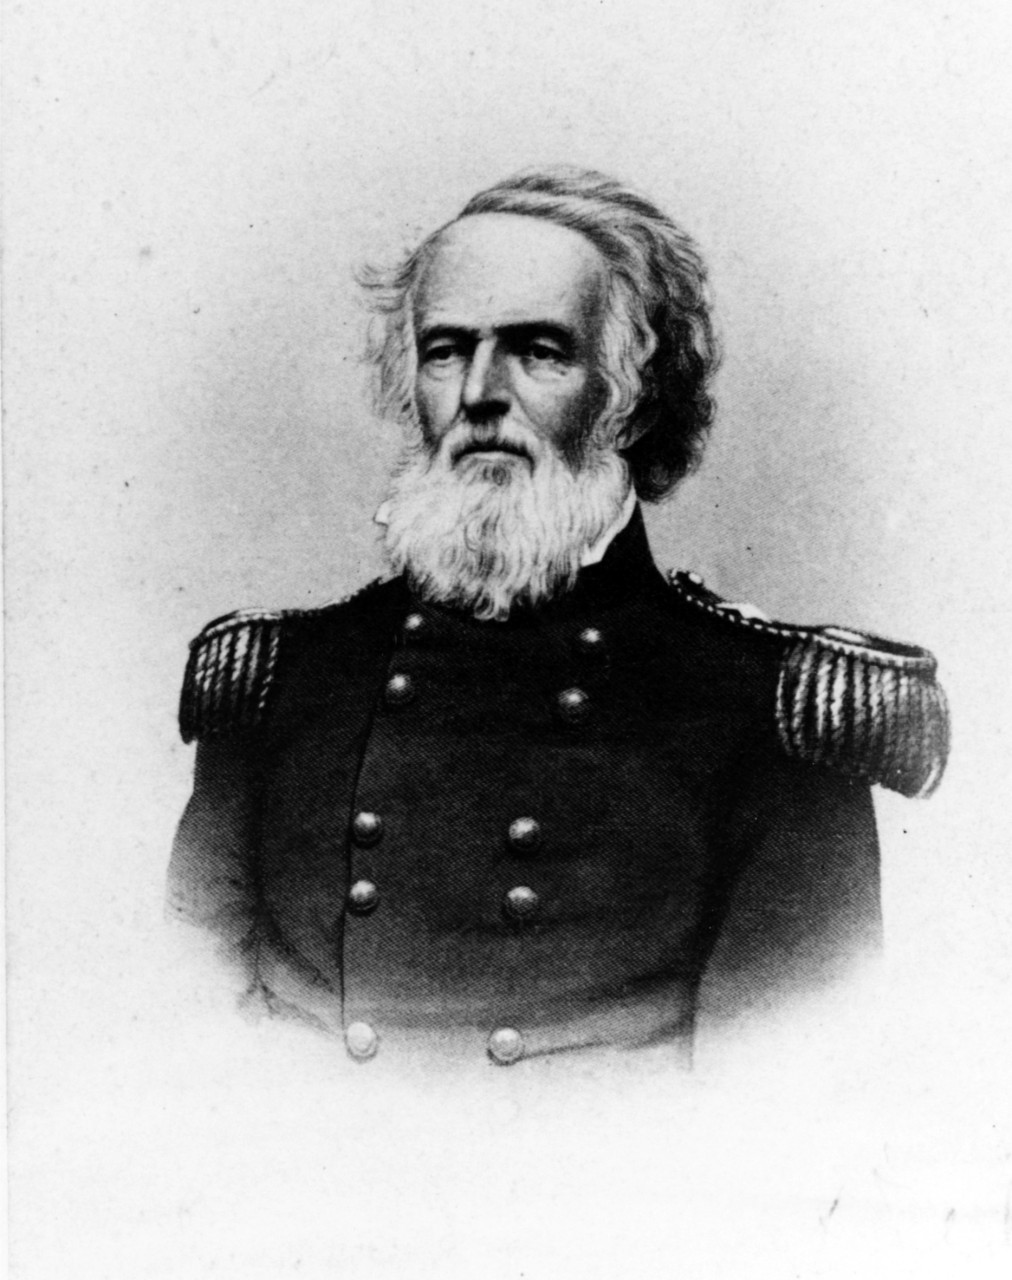 Major General Joseph K. Mansfield, U.S. Army